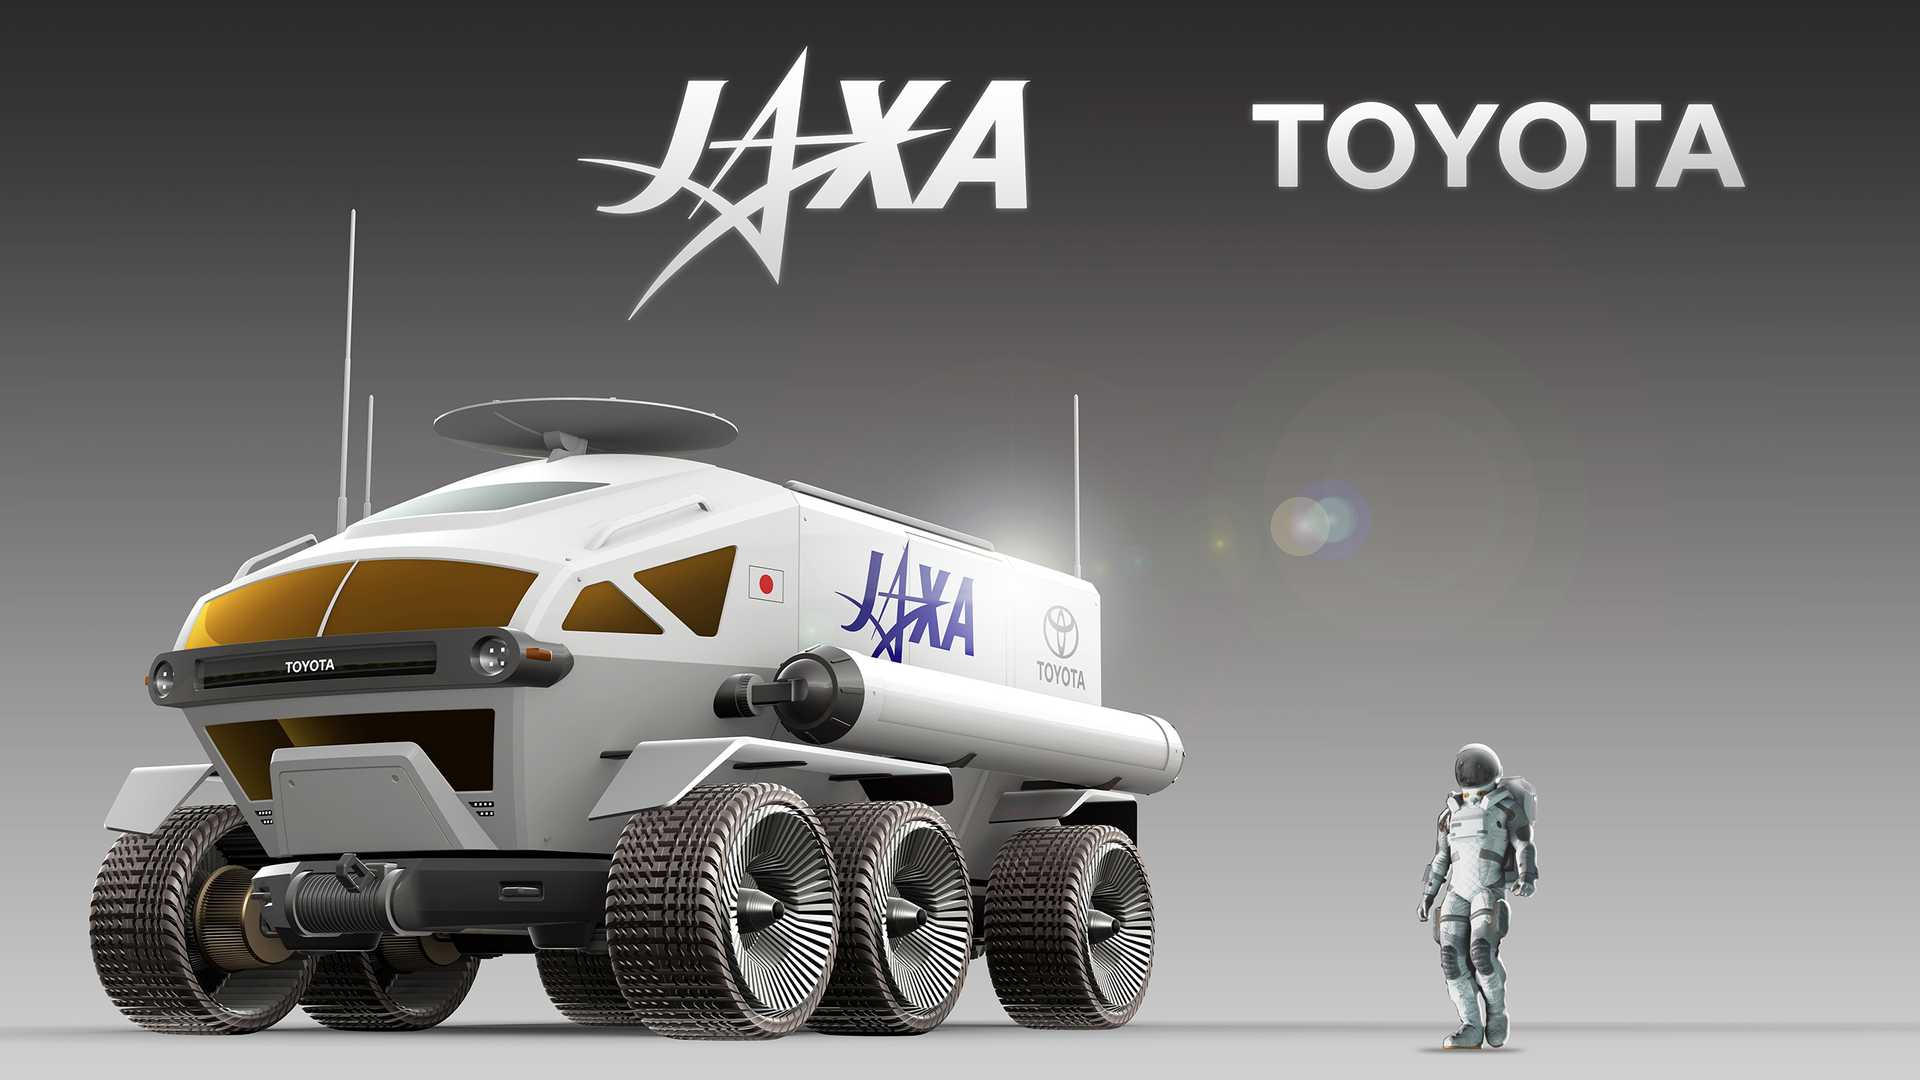 toyota-lunar-rover-concept-art-4.jpg